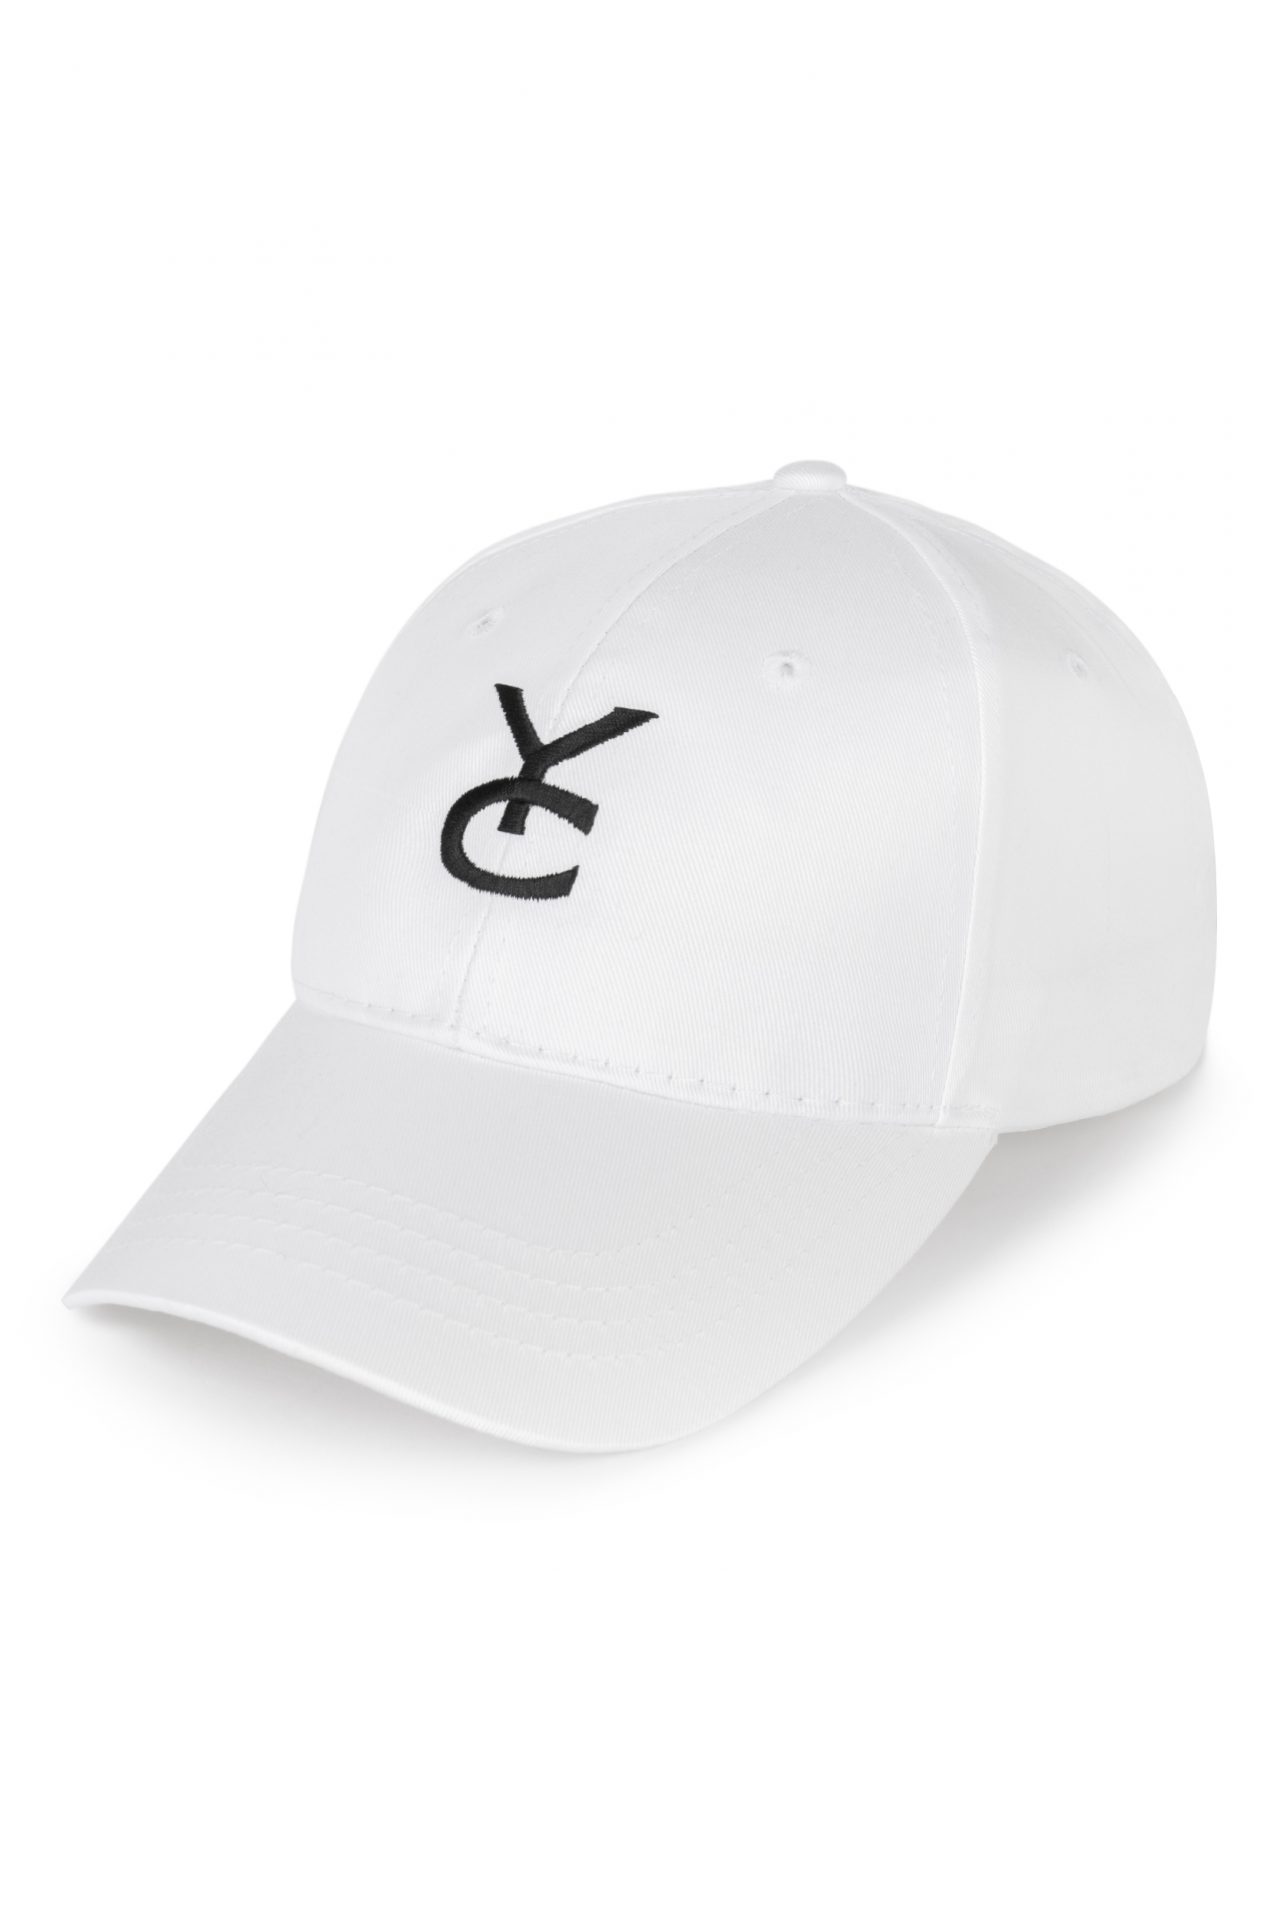 gorra blanca con logo y_como